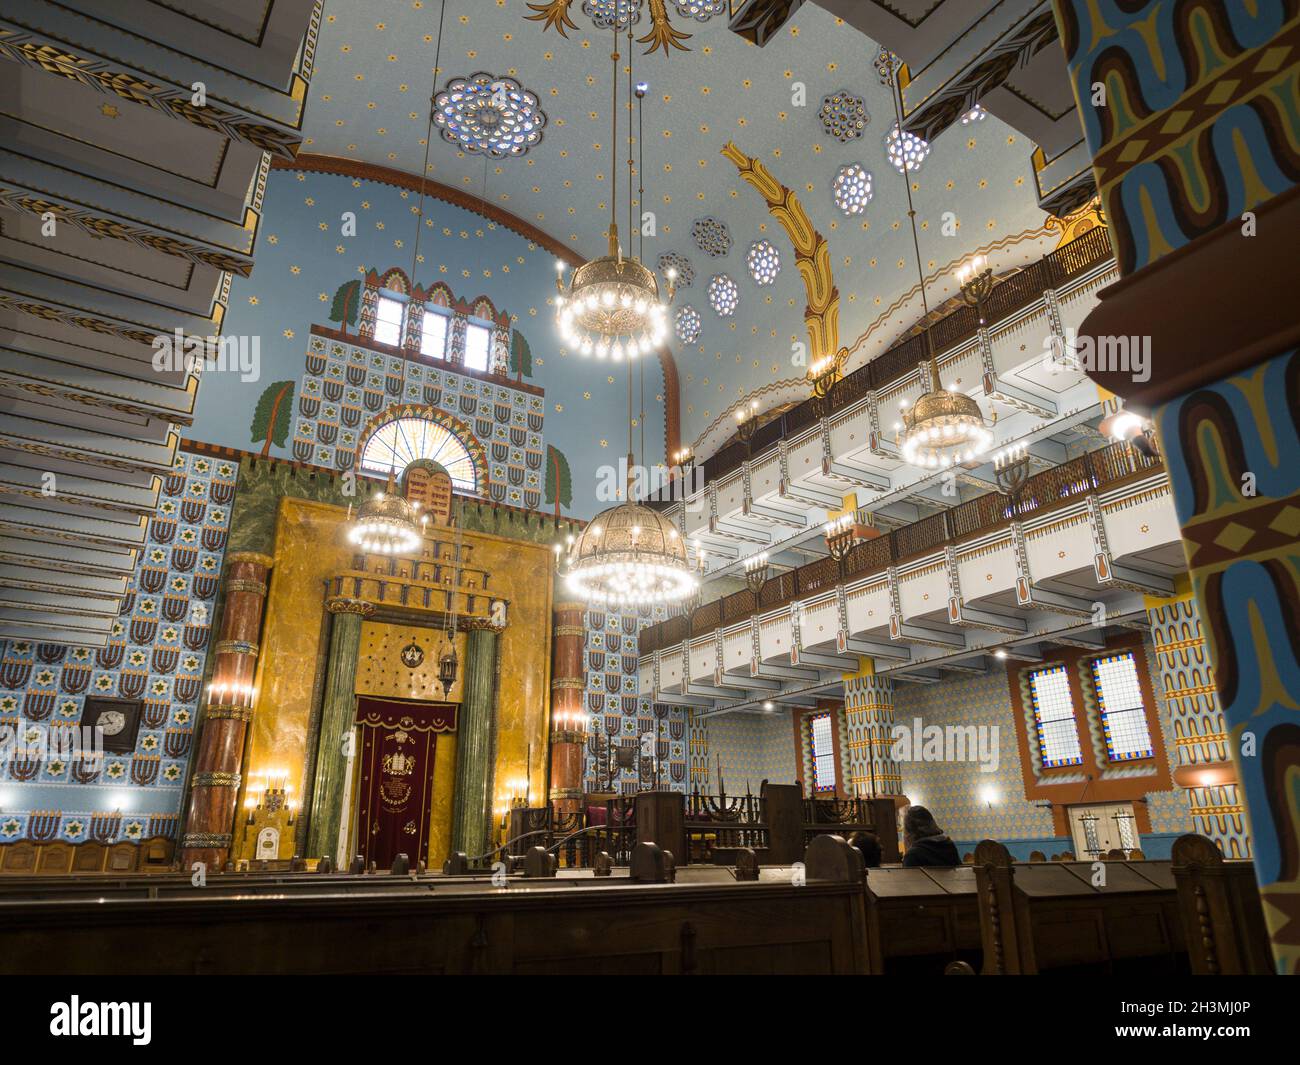 Interior de la Sinagoga Ortodoxa de la Calle Kazinczy: Interior de la Sinagoga Ortodoxa de la Calle Kazinczy, vista lateral trasera. Foto de stock